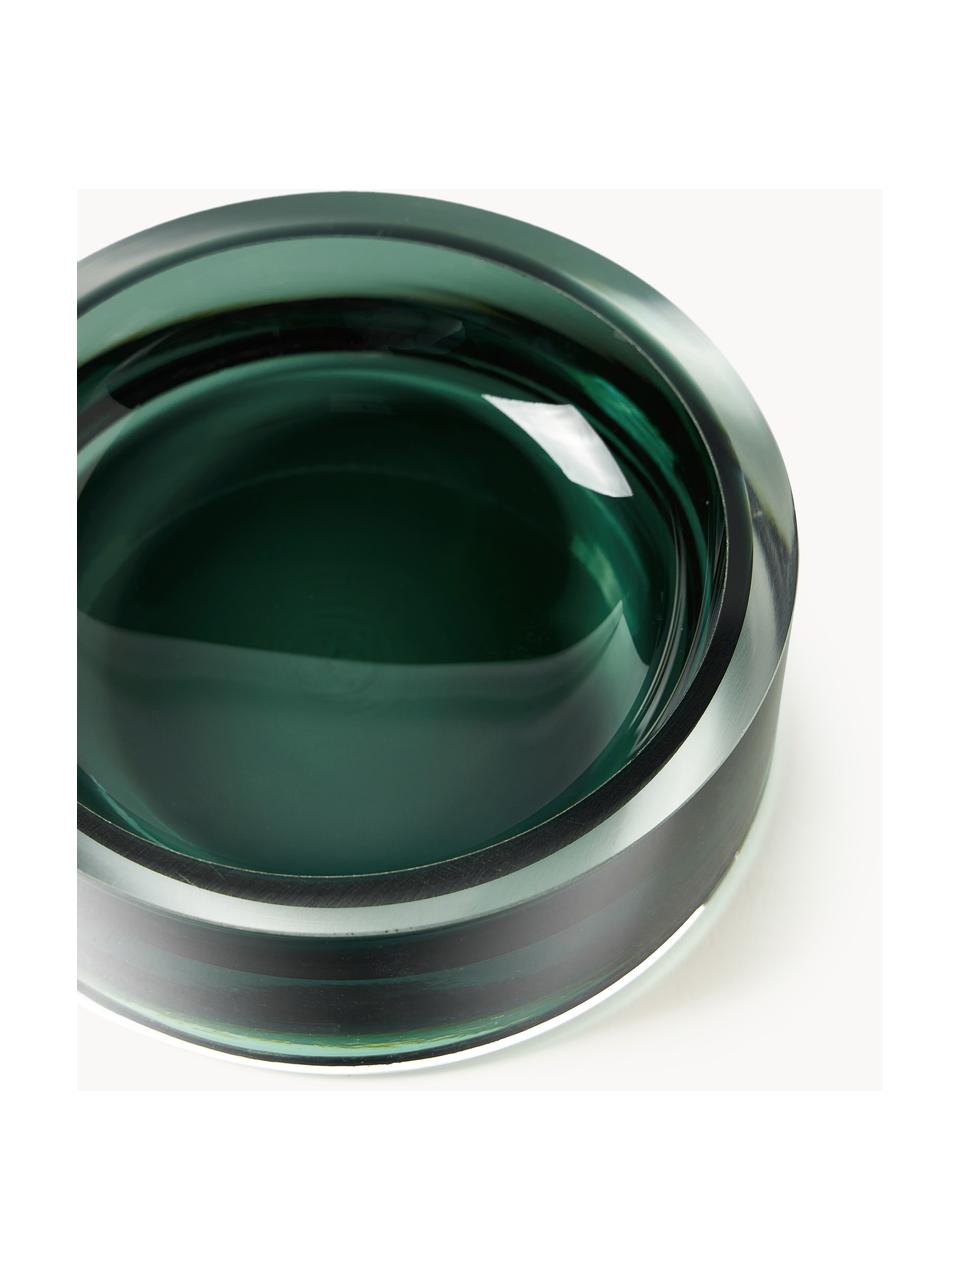 Bandeja decorativa soplada Nicola, Vidrio de cal sodada, Verde oscuro transparente, Ø 15 cm